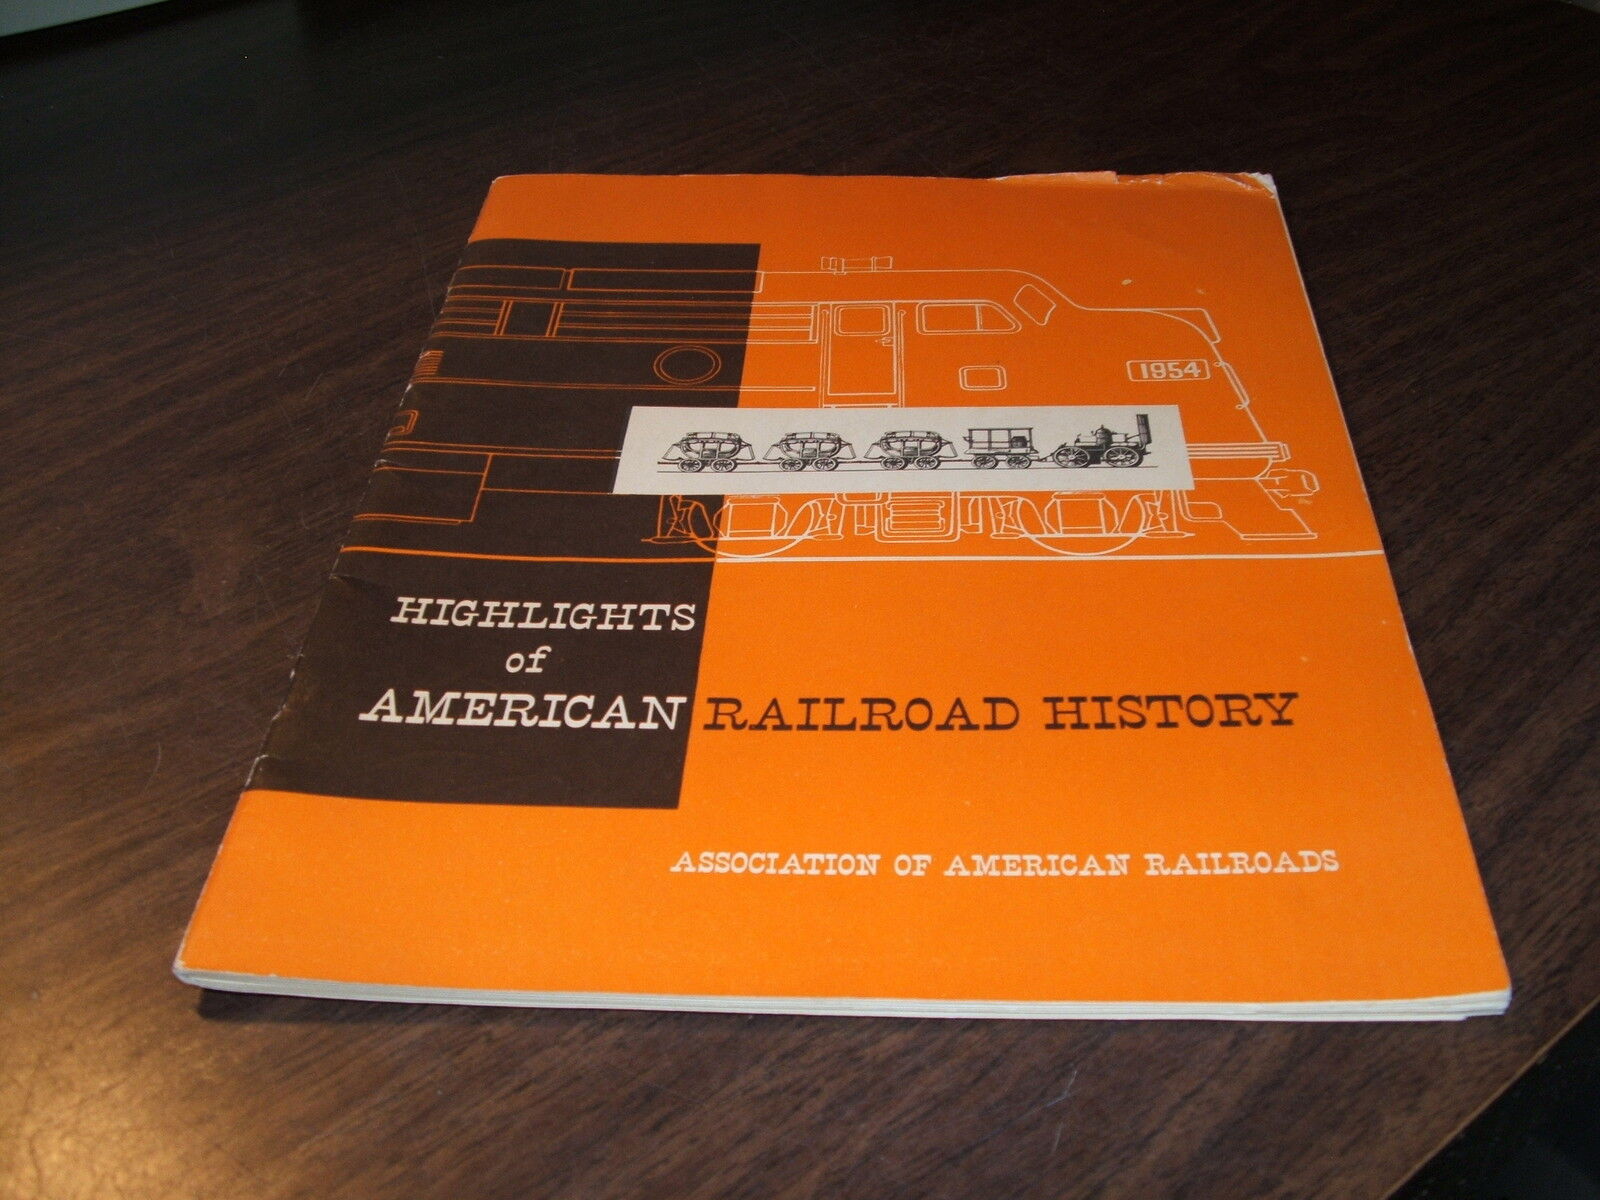 1954 HIGHLIGHTS OF AMERICAN RAILROAD HISTORY ASSOCIATION OF AMERICAN RAILROADS